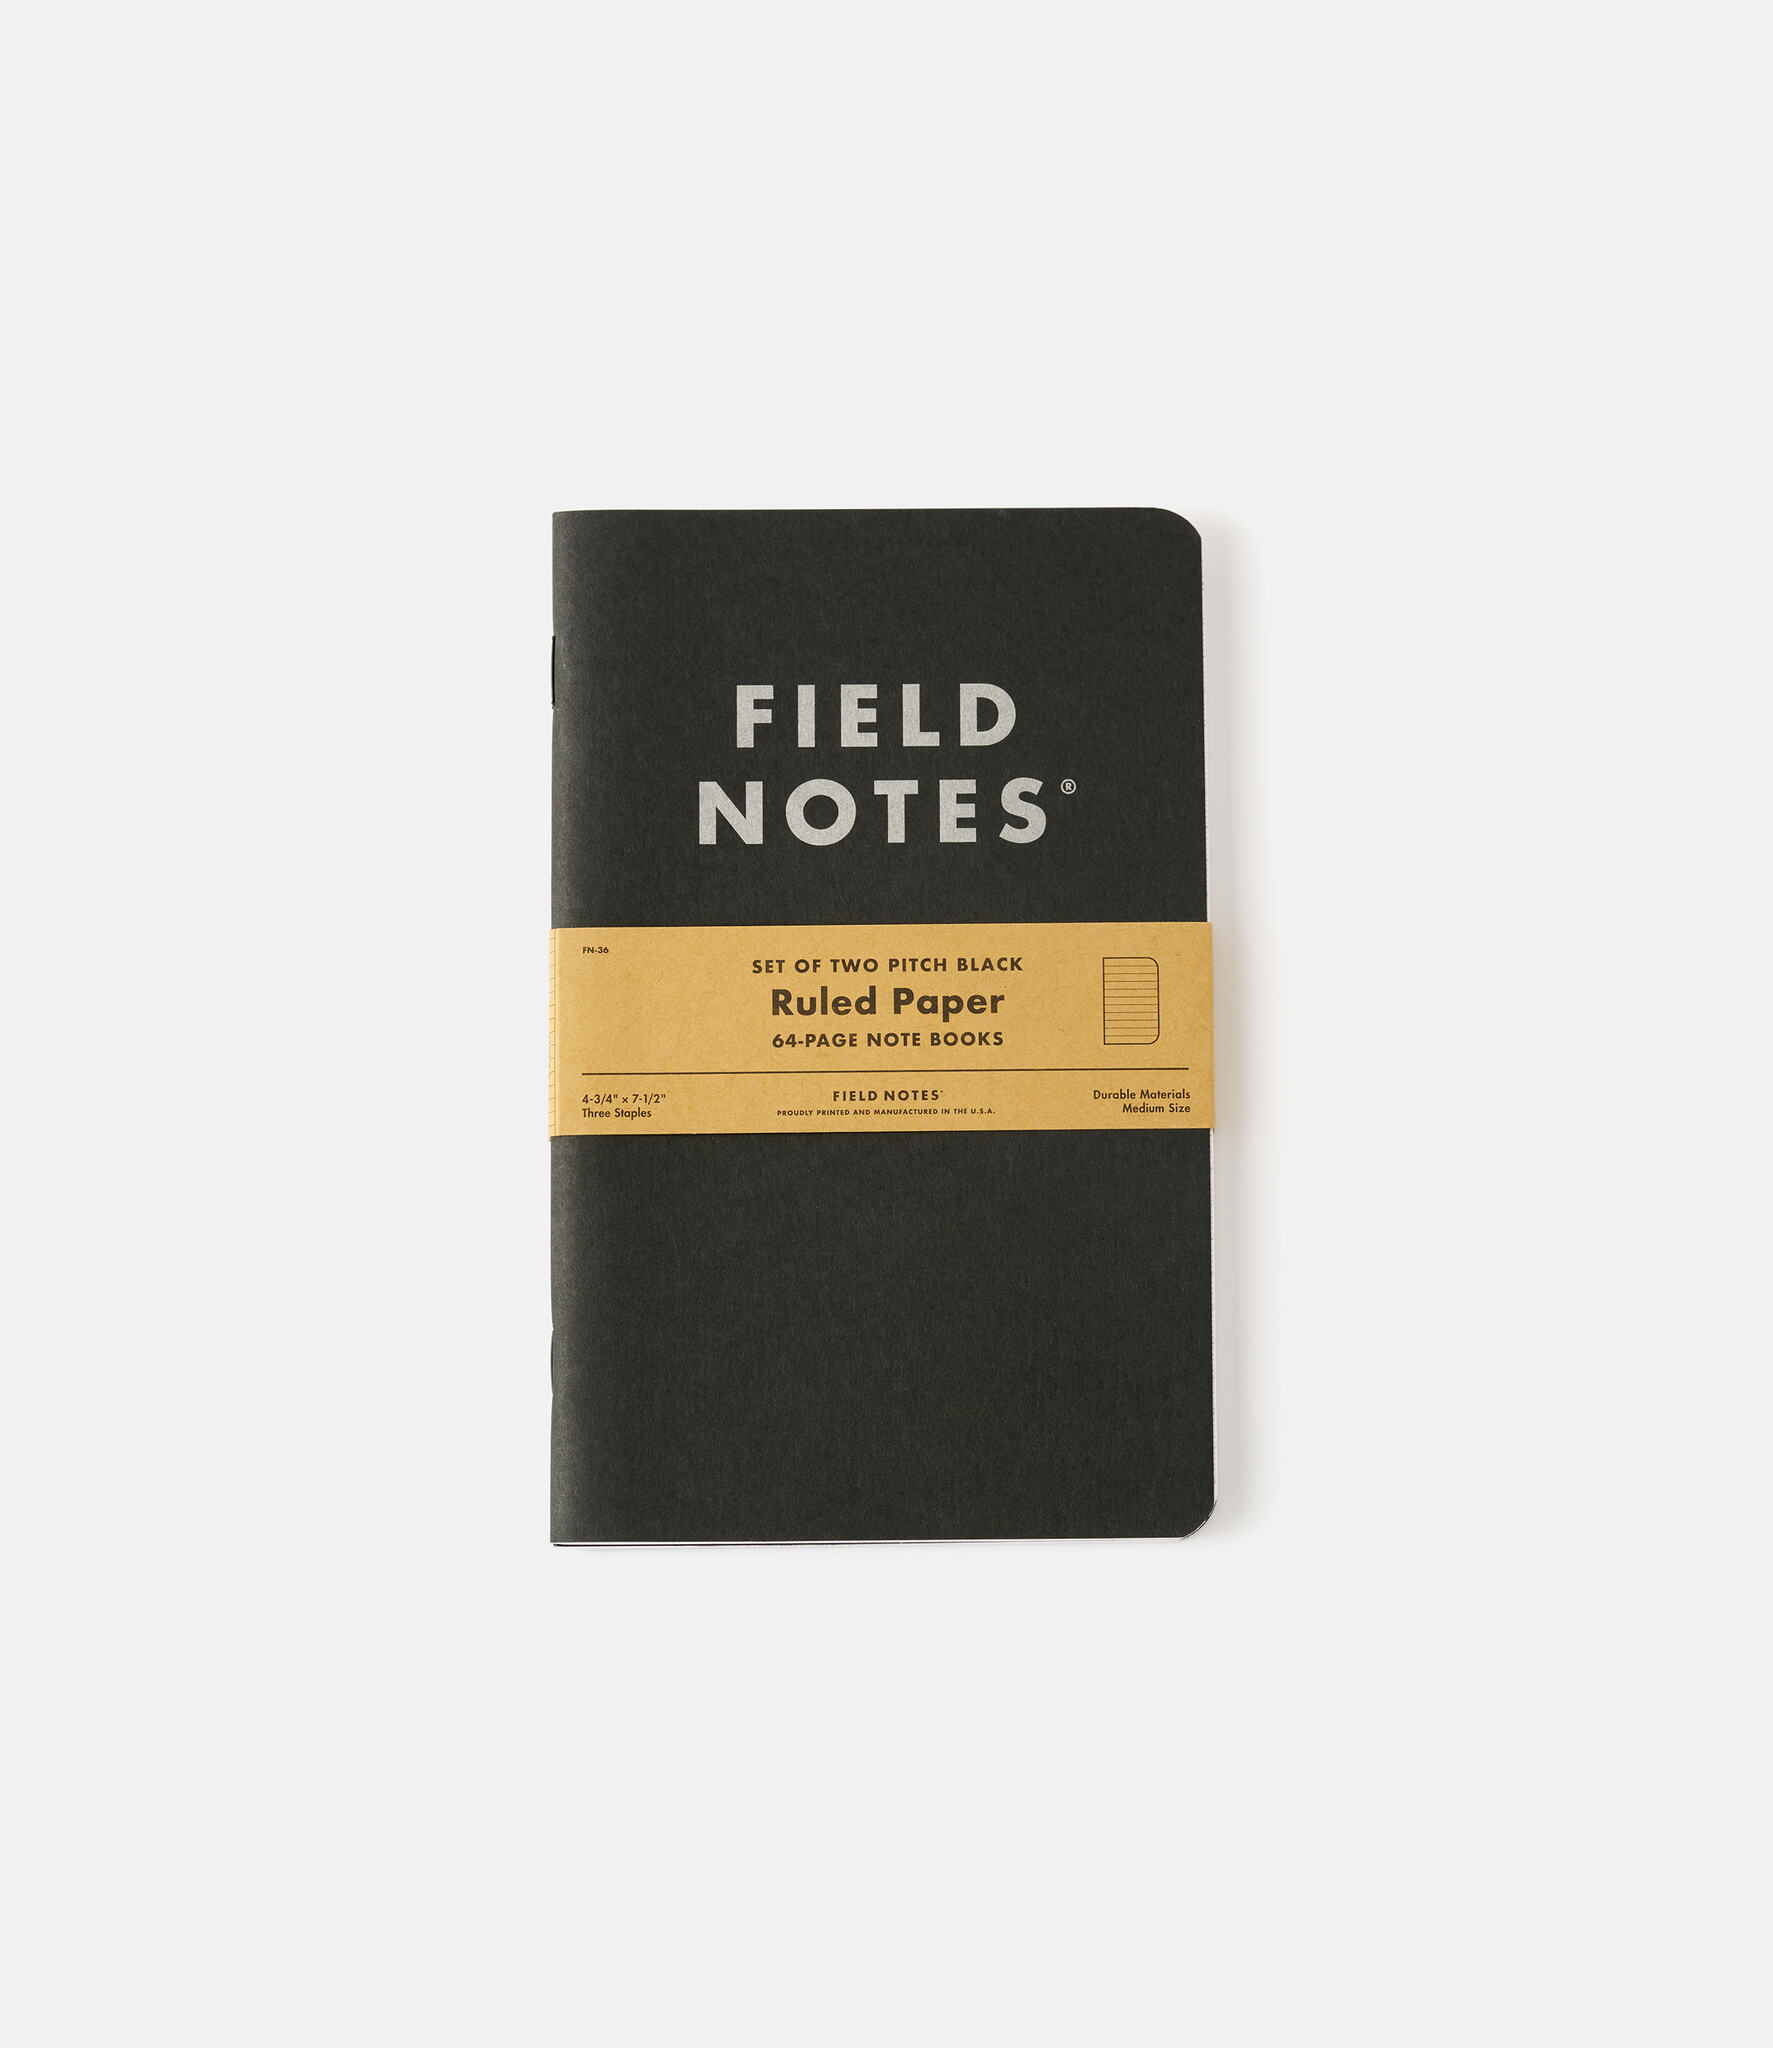 Field Notes Pitch Black Note Book — набор линованных блокнотов